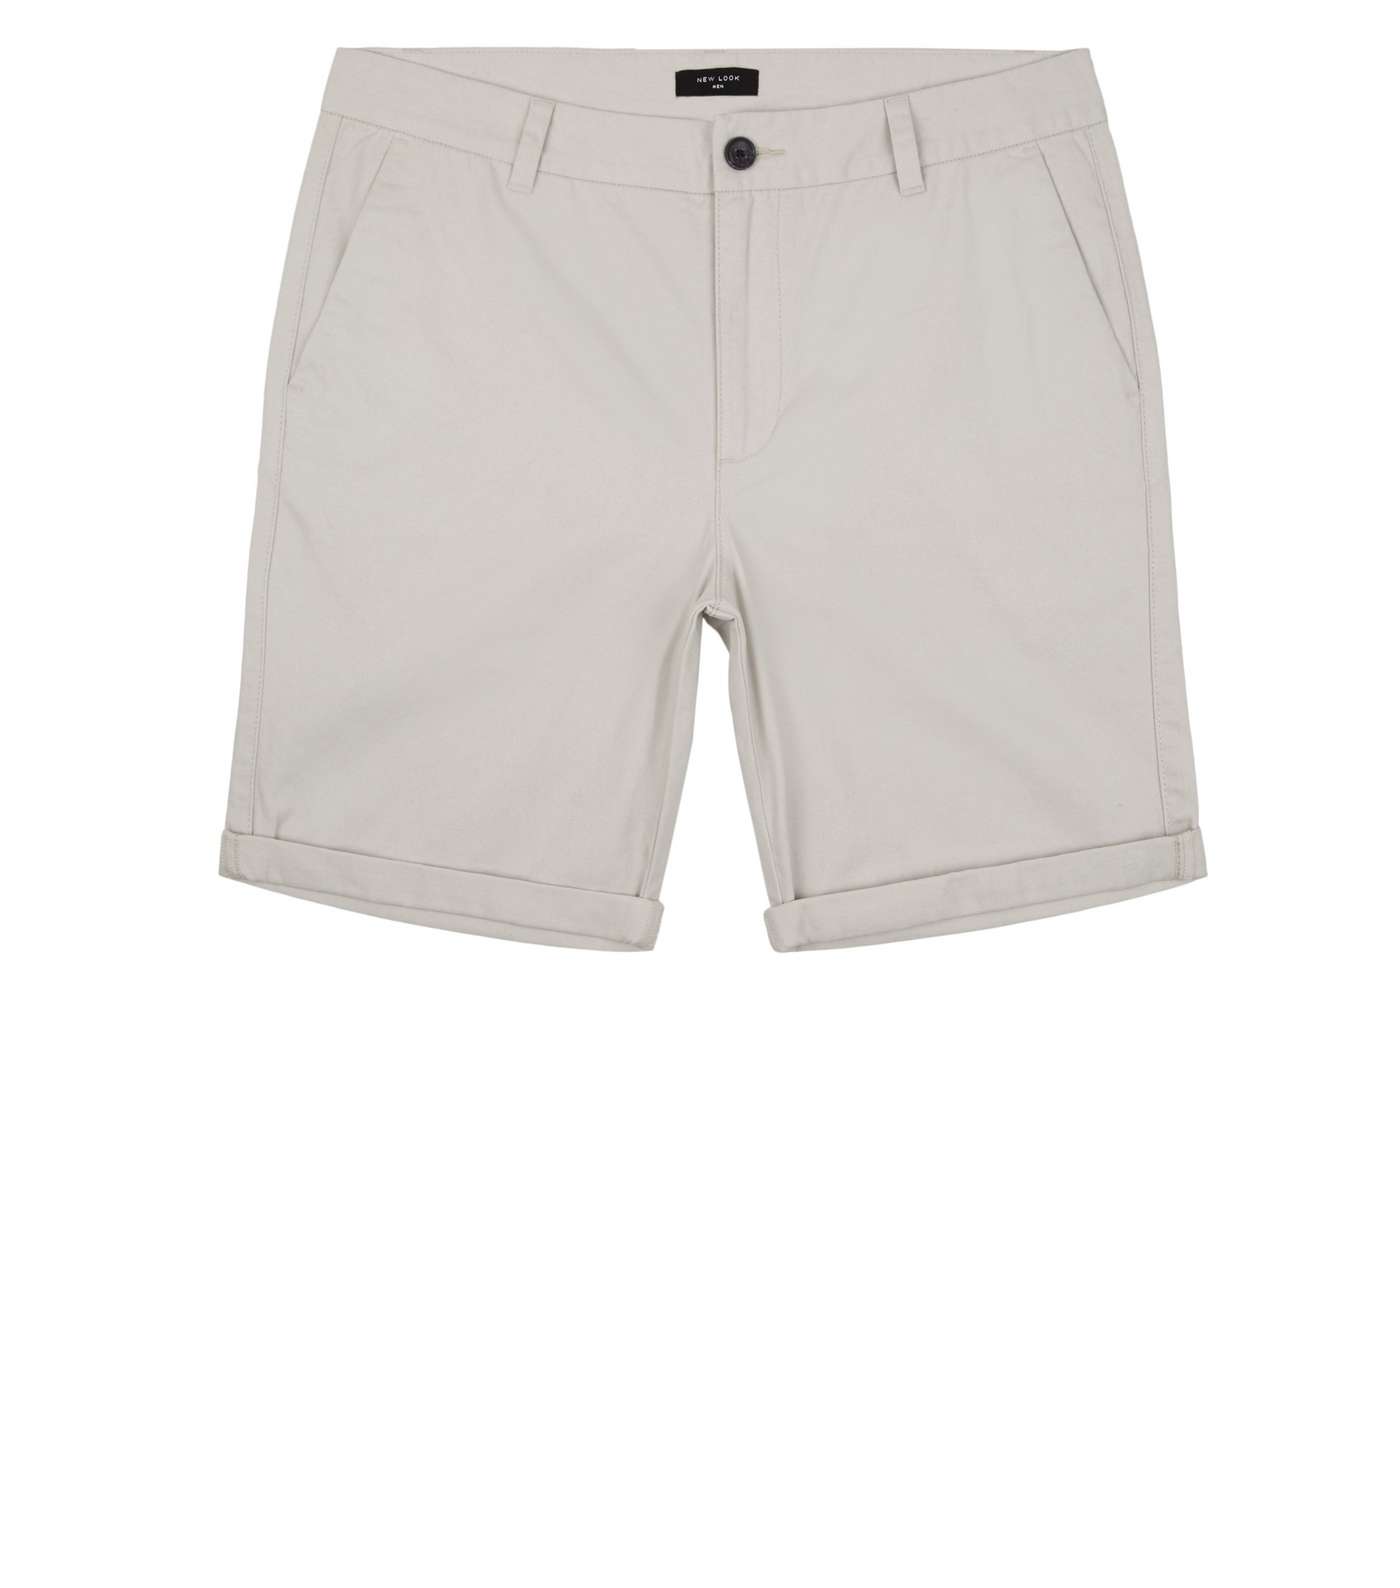 Grey Chino Cotton Shorts Image 4